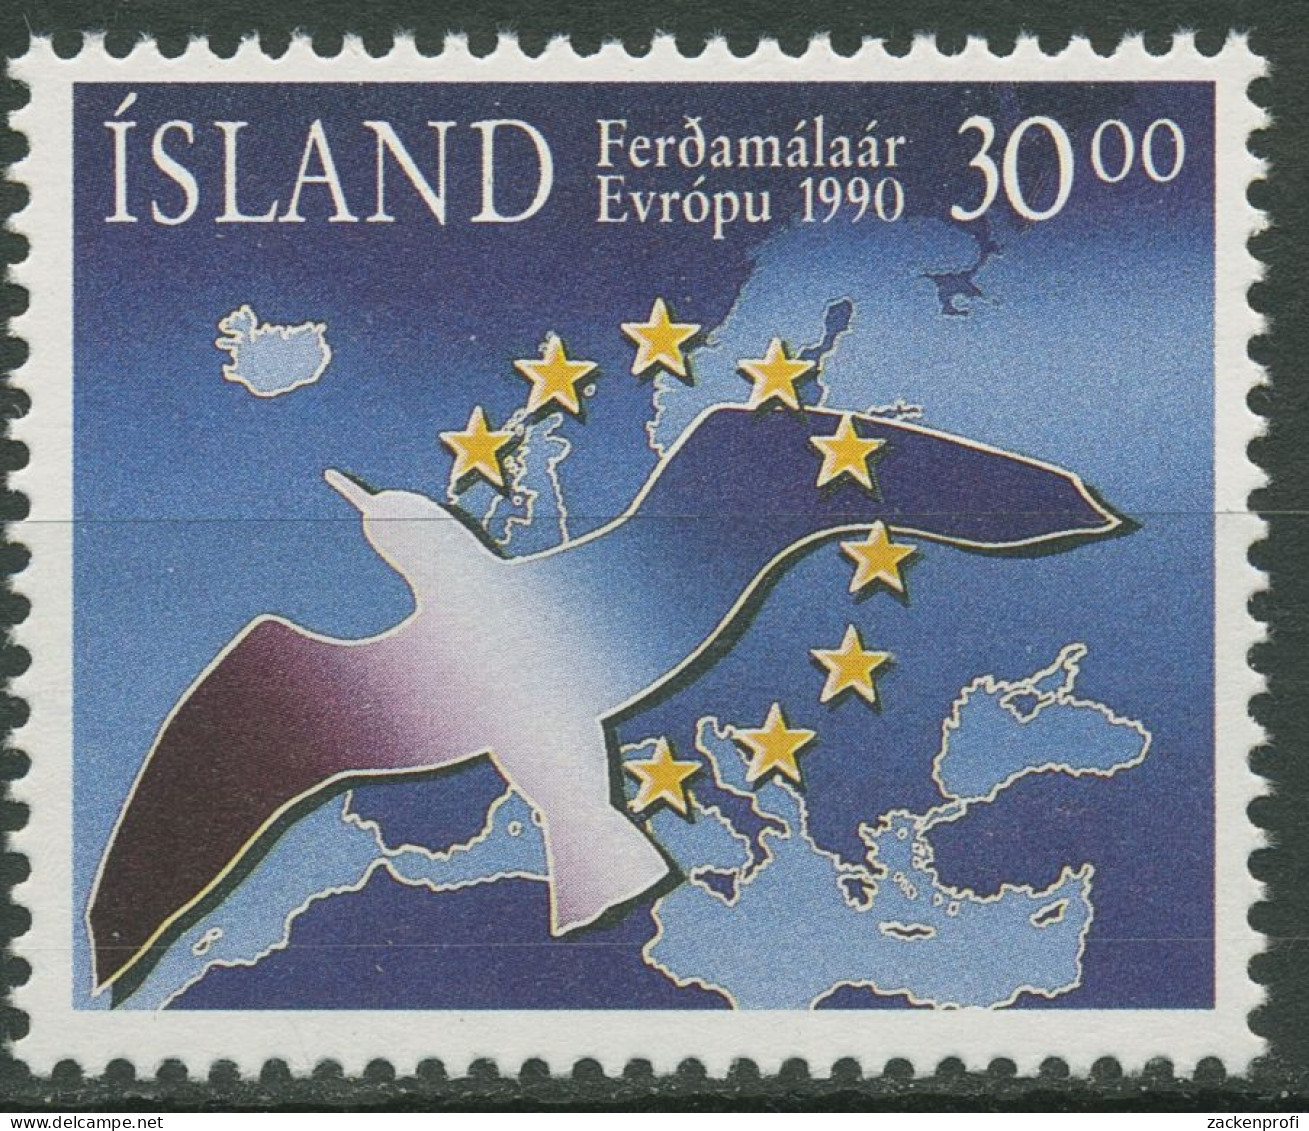 Island 1990 Tourismus Landkarte Europas Vögel 730 Postfrisch - Unused Stamps